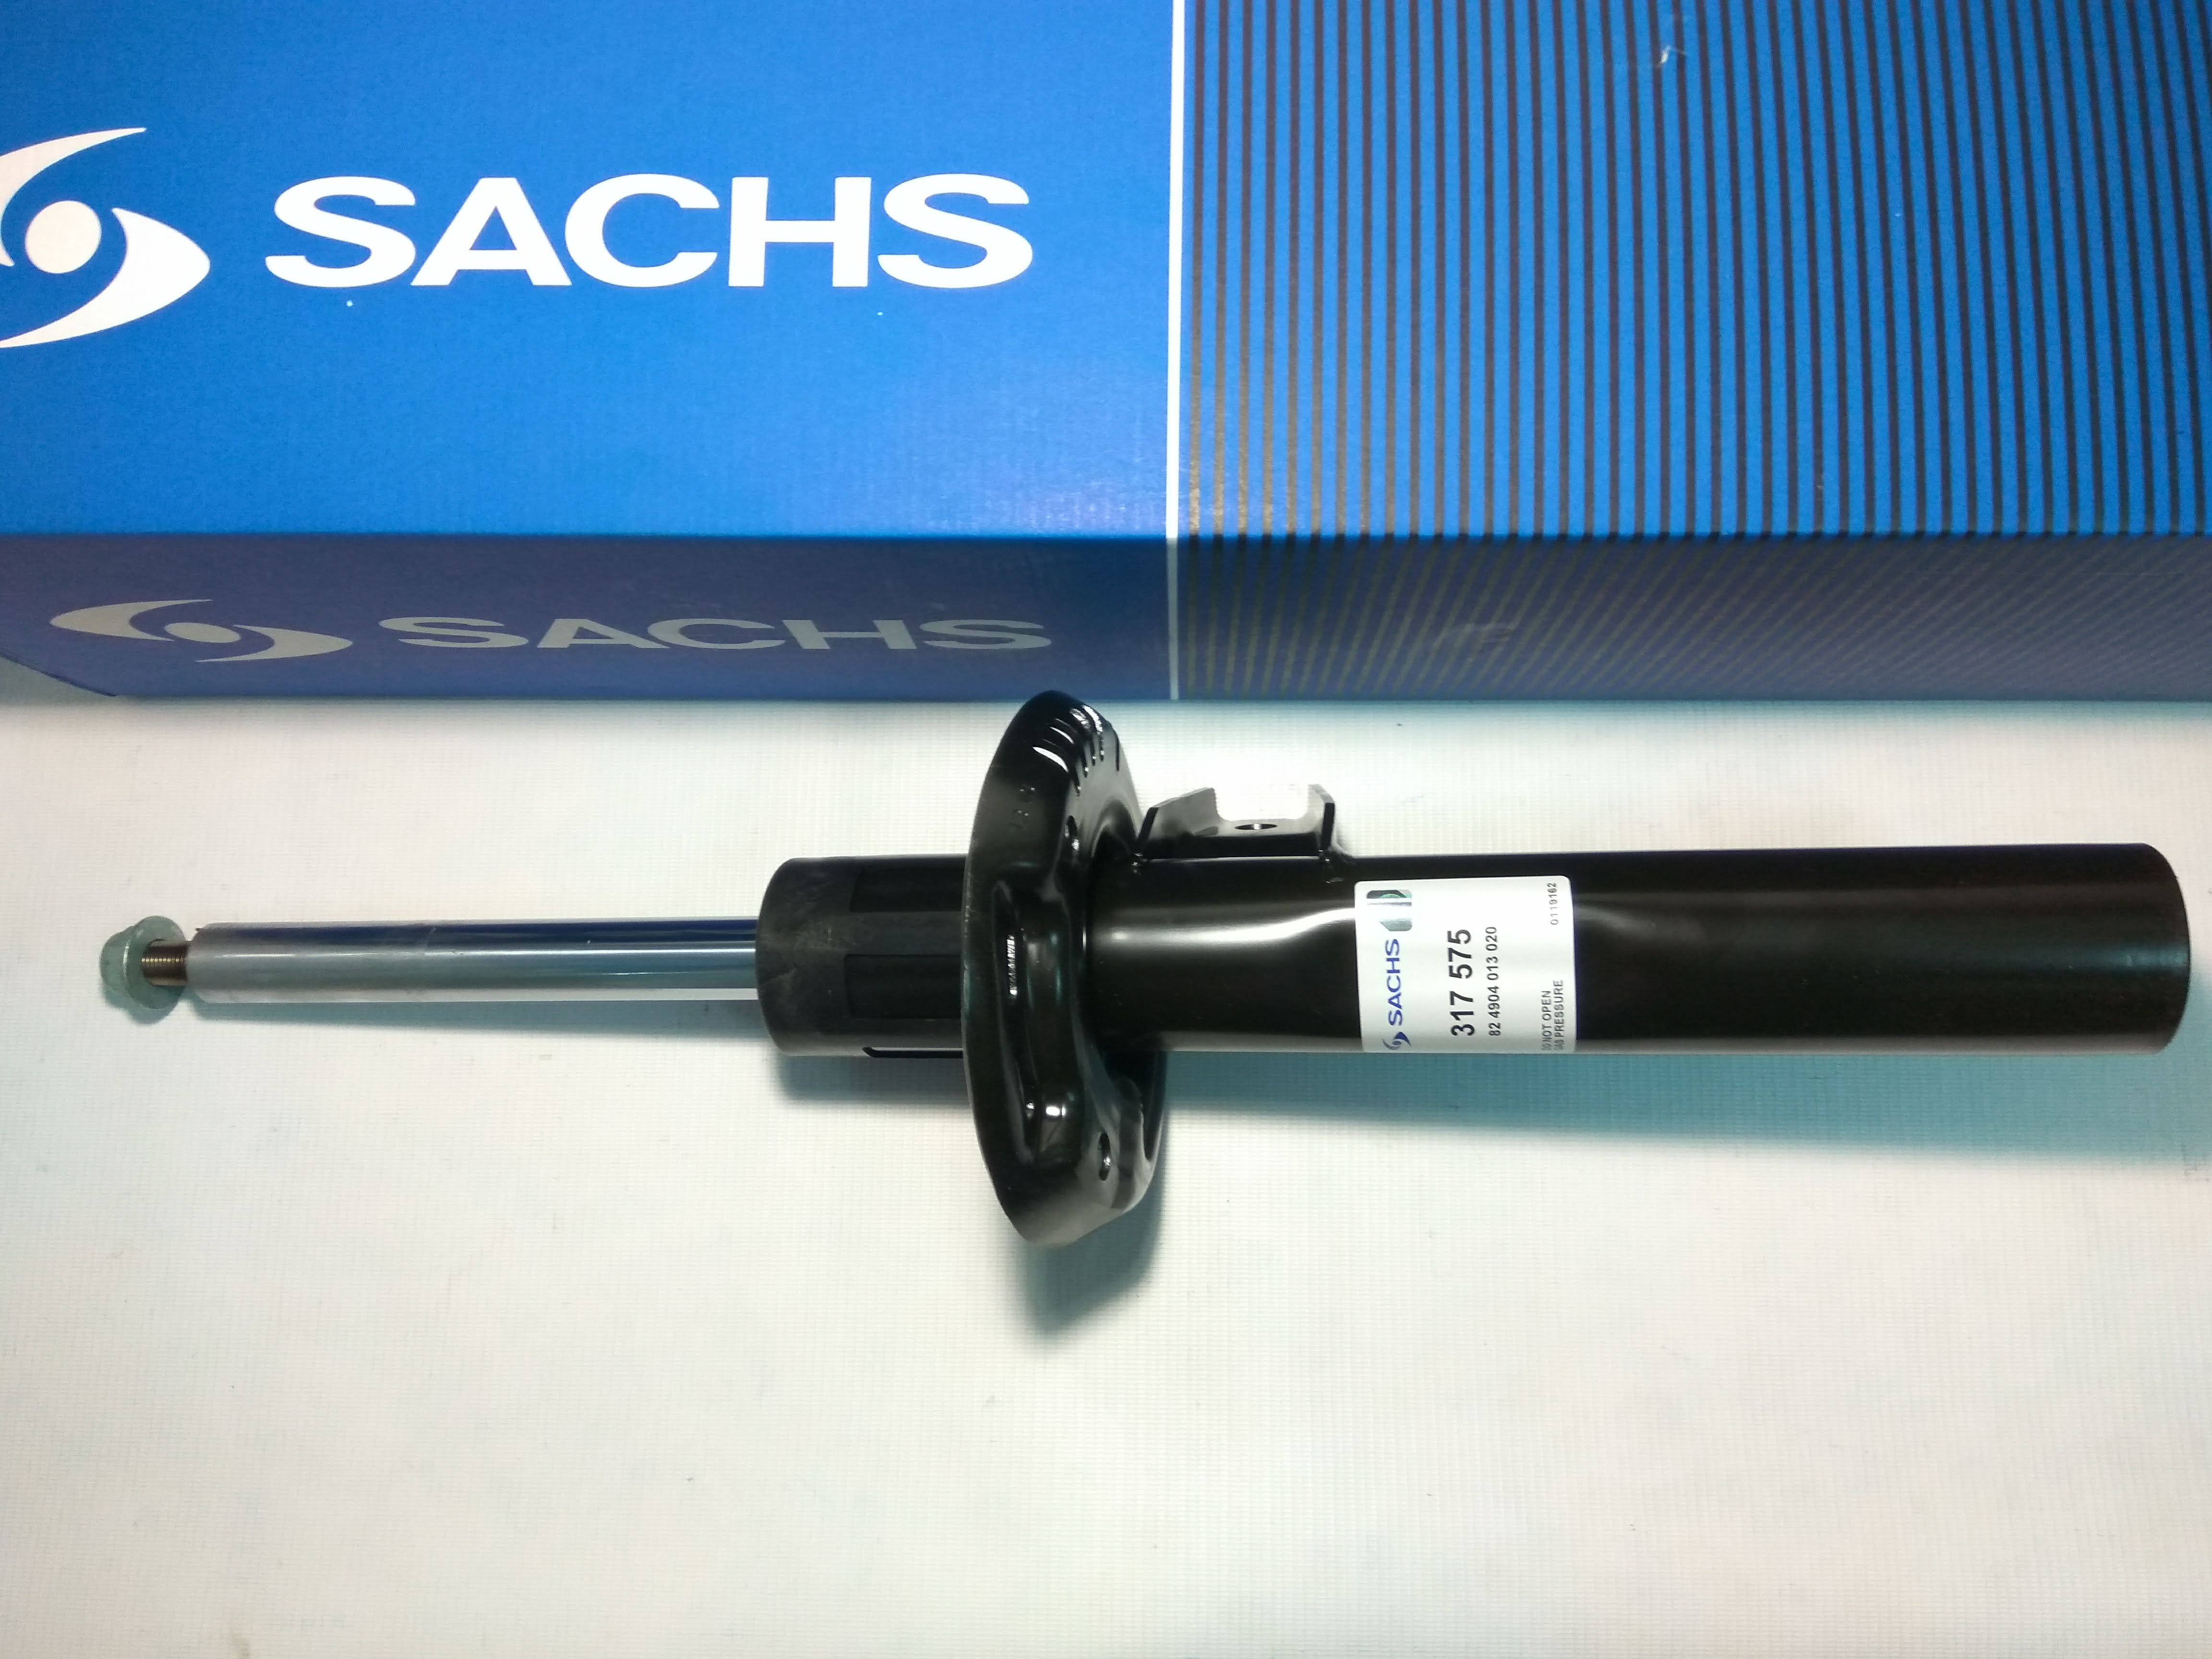 Передний амортизатор на VW Eos (55 мм), Sachs 317575 газомасляный